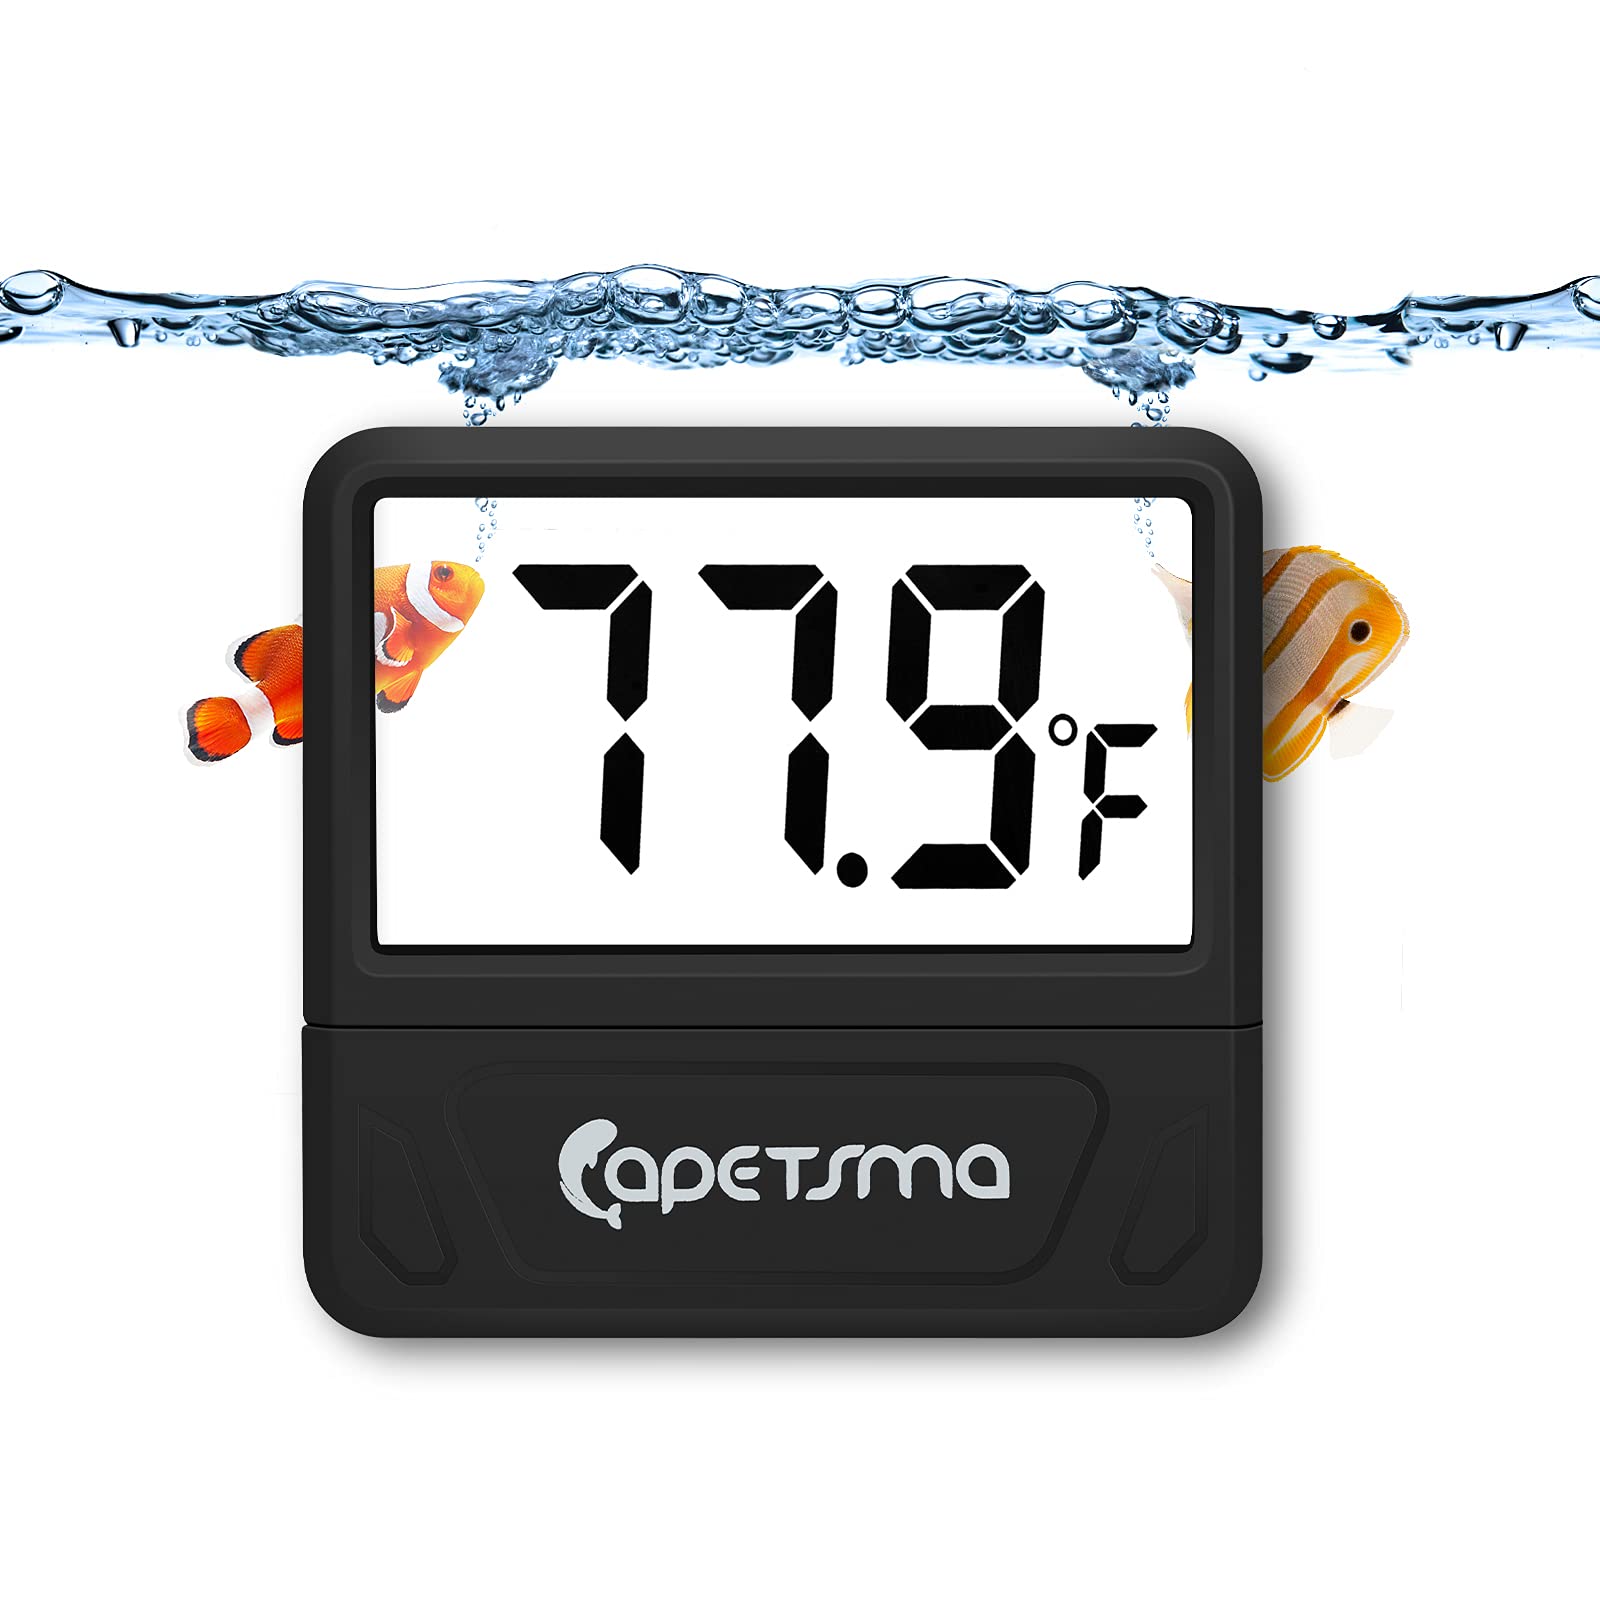 capetsma Aquarium Thermometer Digital Fish Tank Thermometer